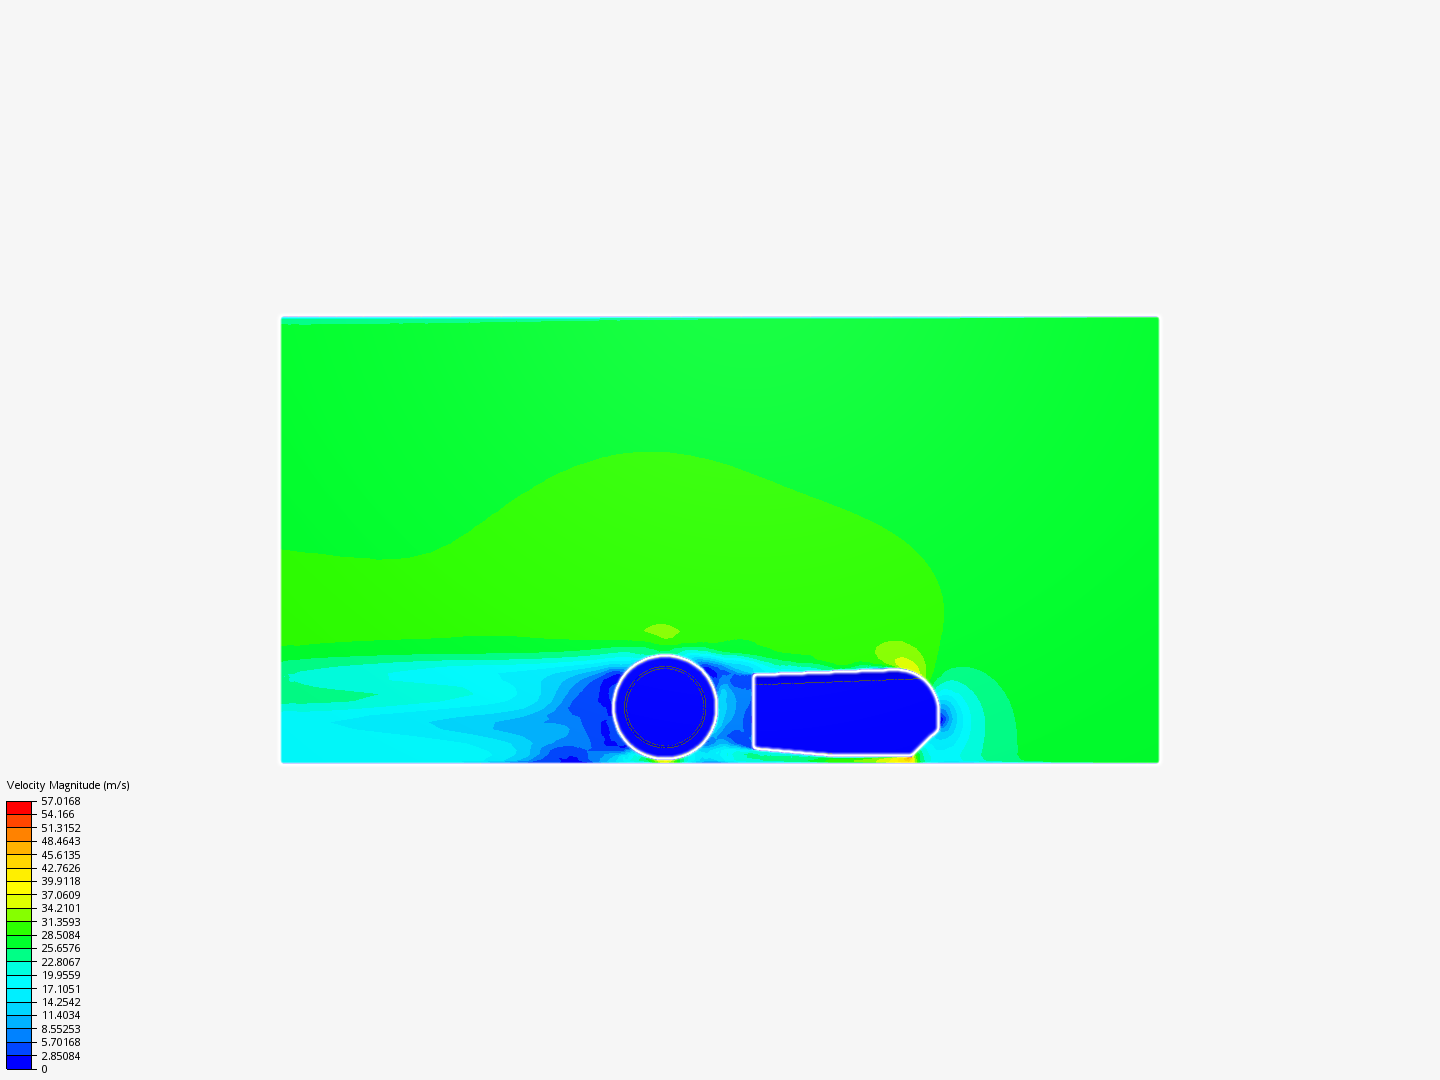 simulation image